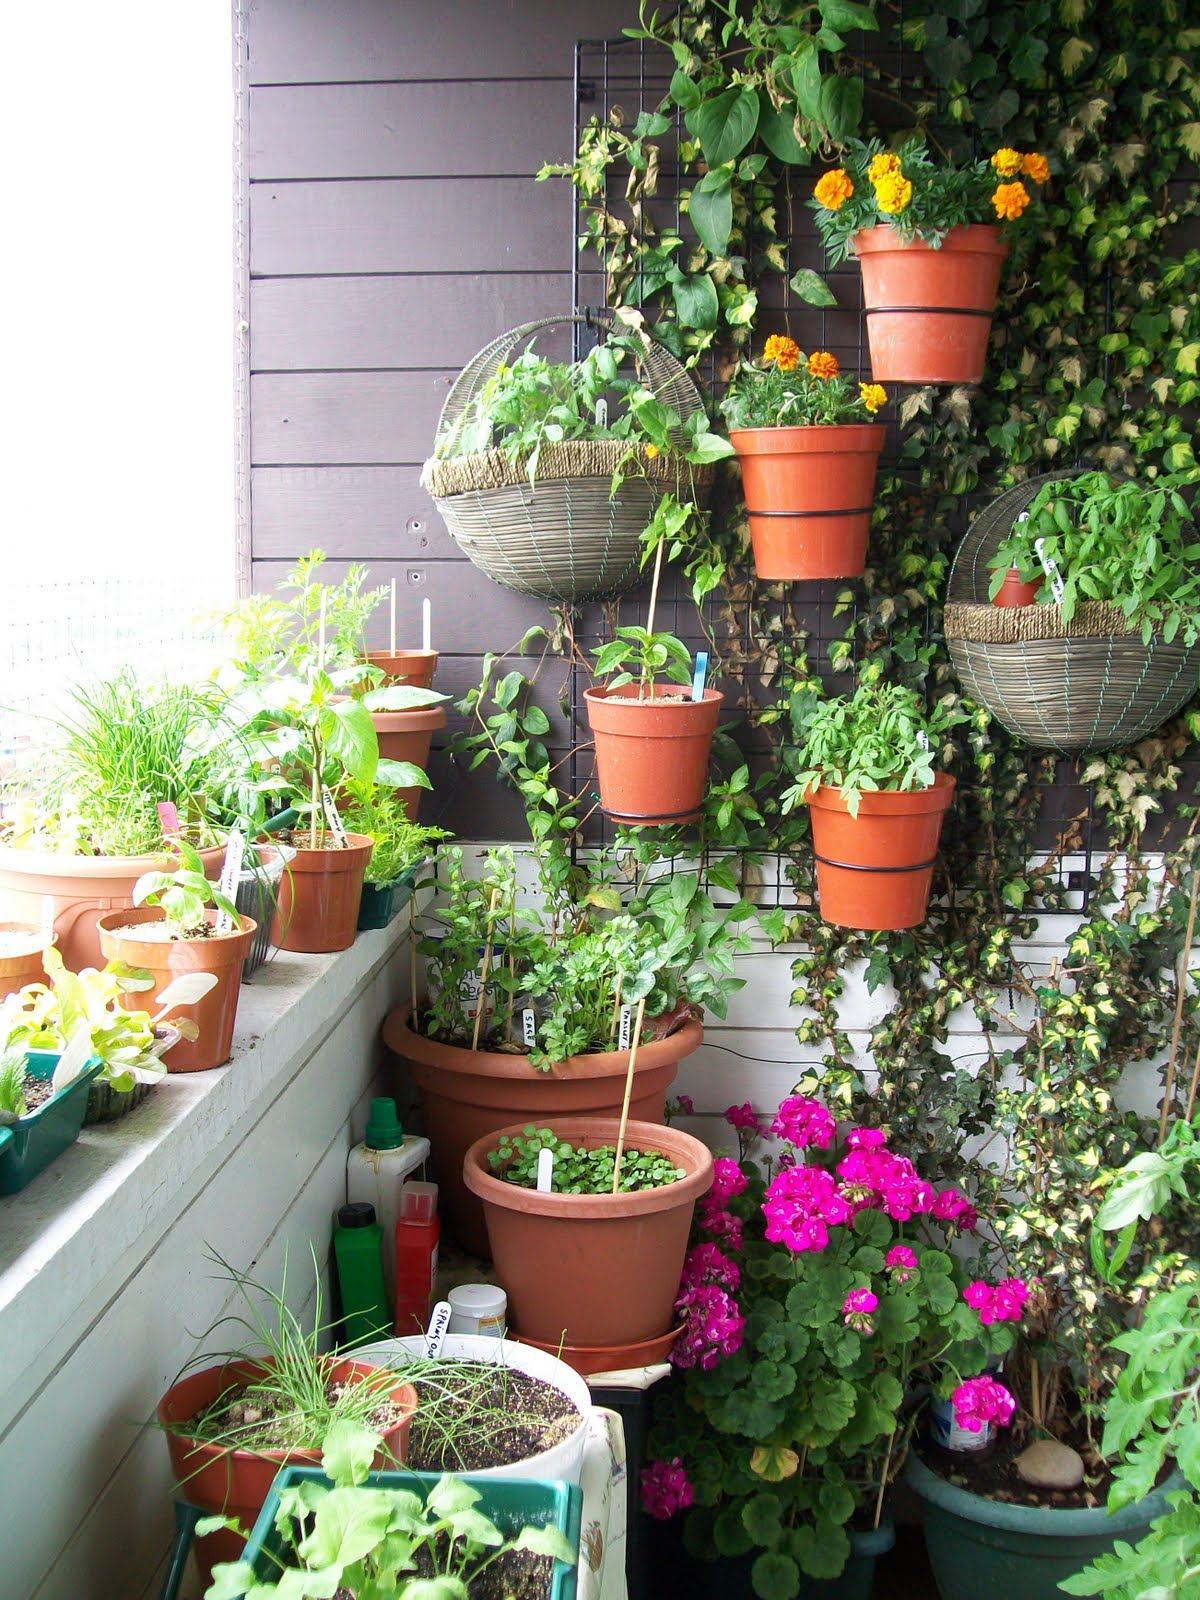 Balcony Plants Ideas - Cool Creative Ideas Small Balcony Garden by ...